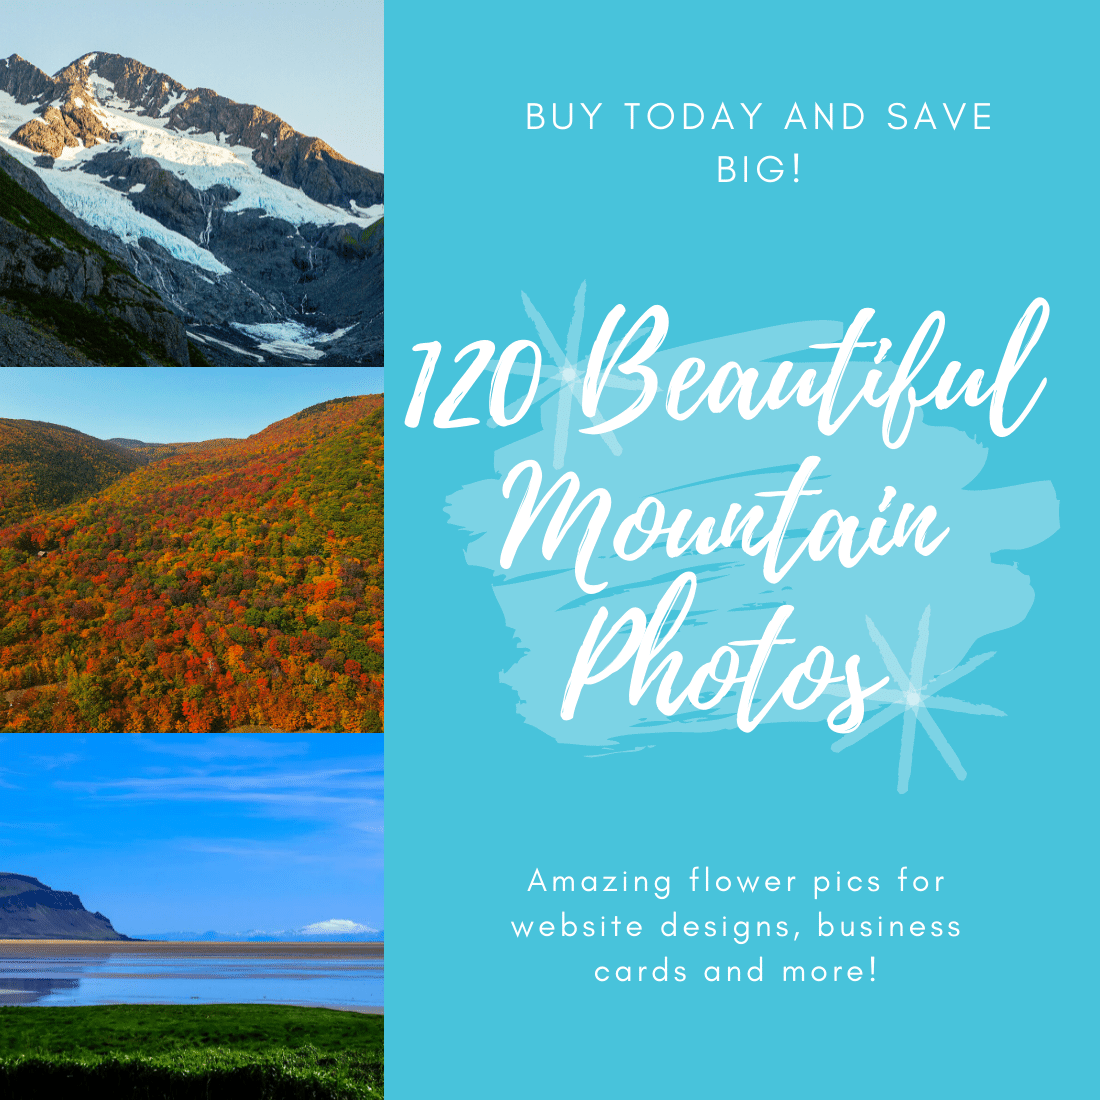 120 Beautiful Mountain Stock Photos Cover Image.